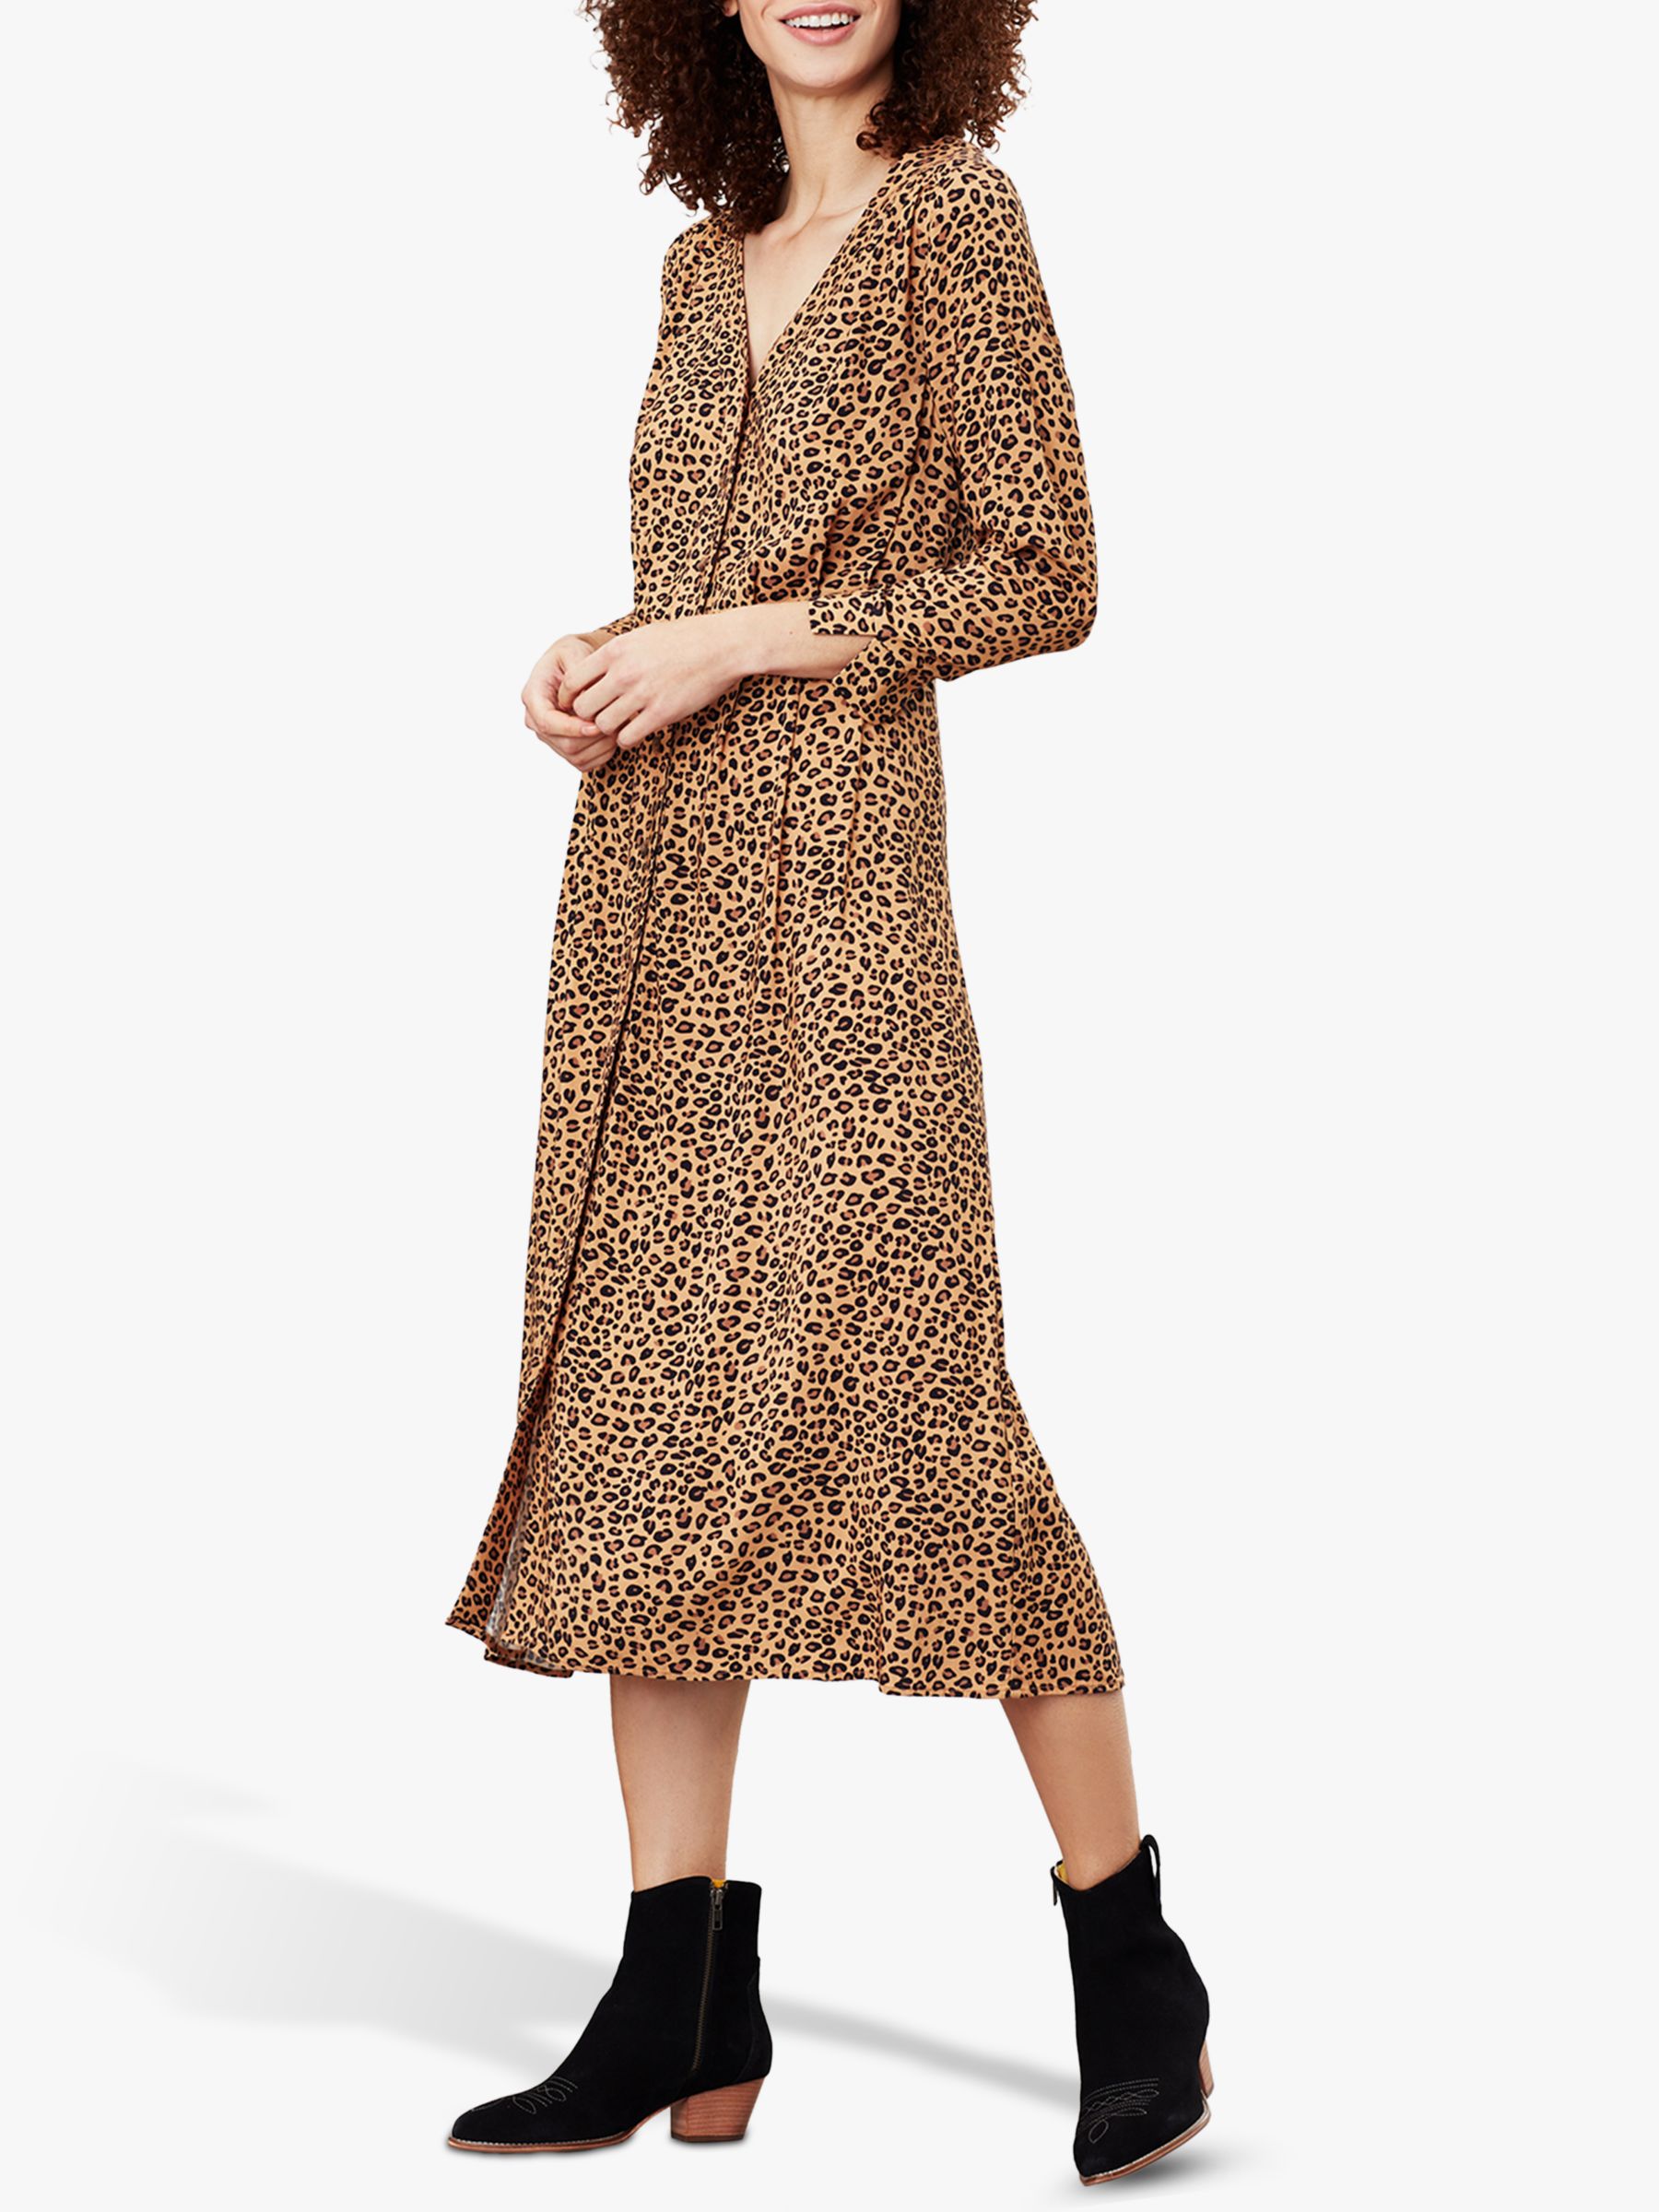 mid length leopard print dress